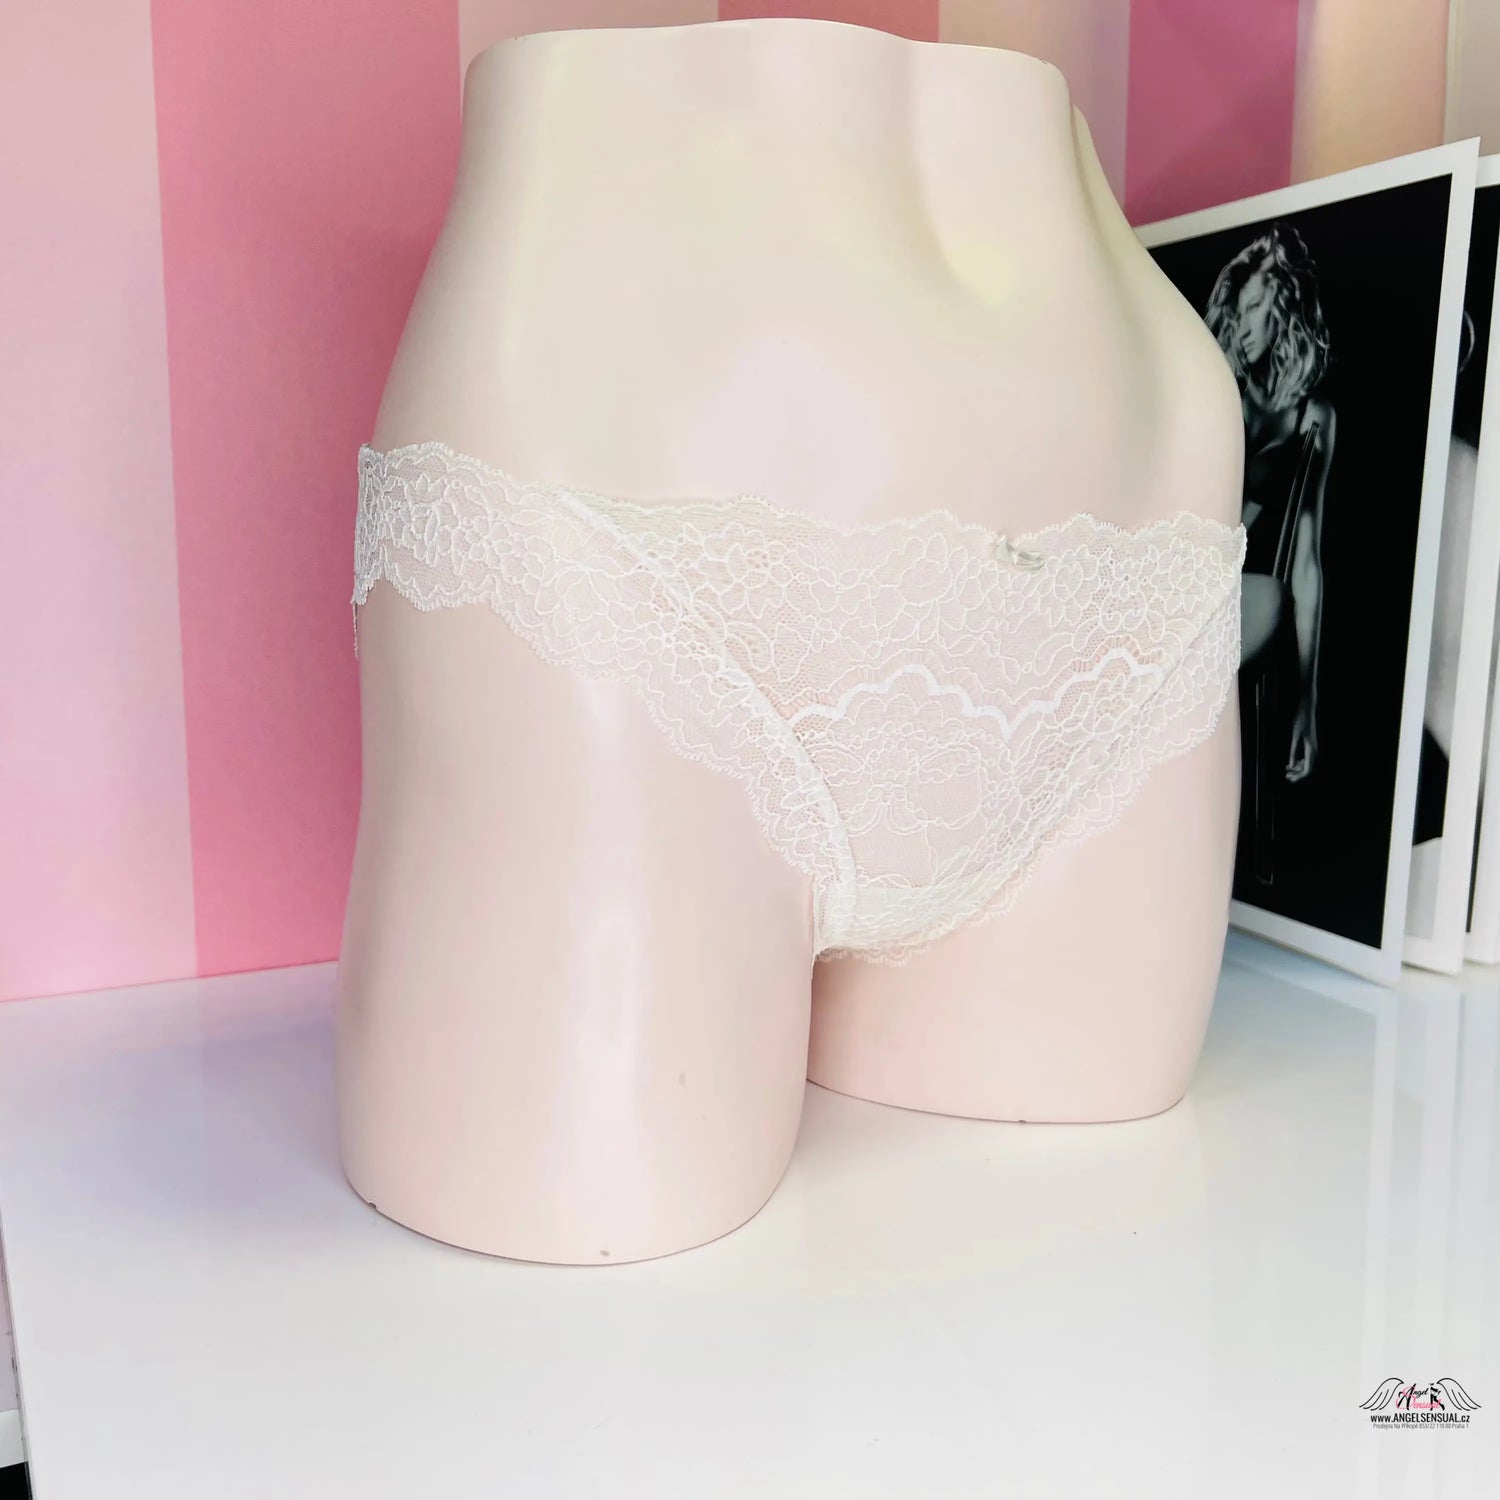 Bílé krajkové kalhotky - M / Bílá / Nové se štítky - Kalhotky Victoria’s Secret